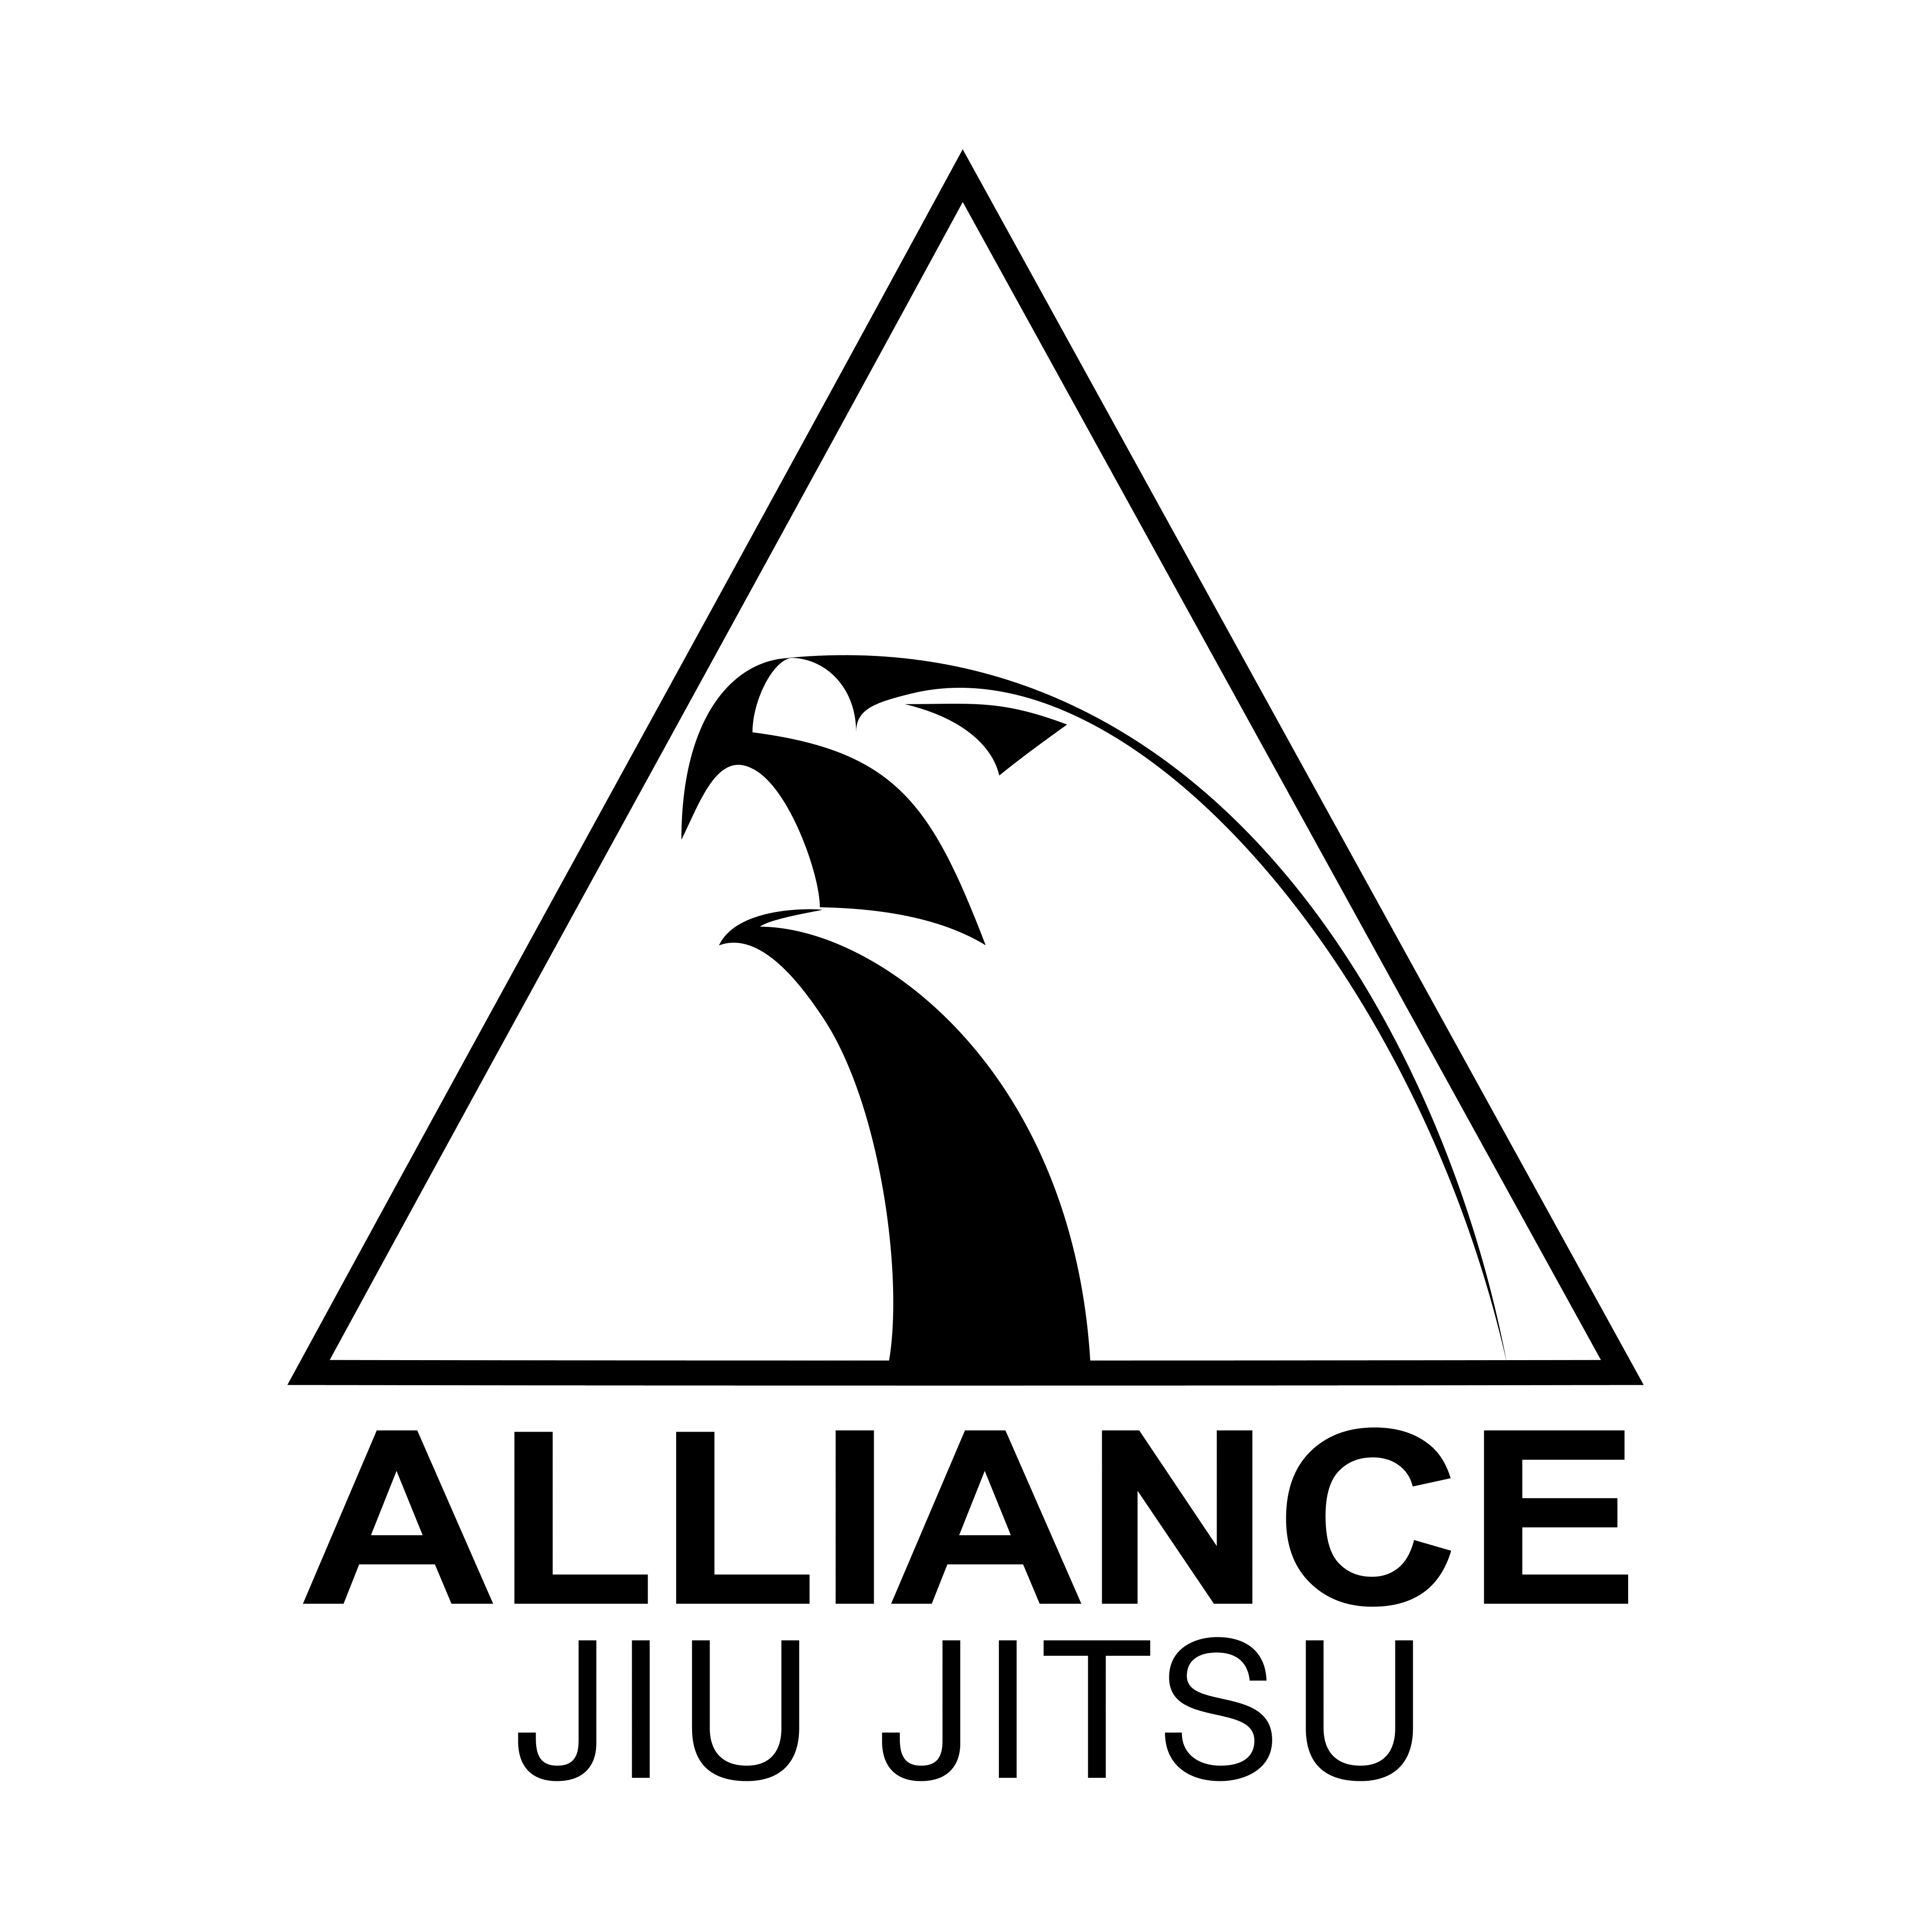 The alliance logo dota 2 фото 117